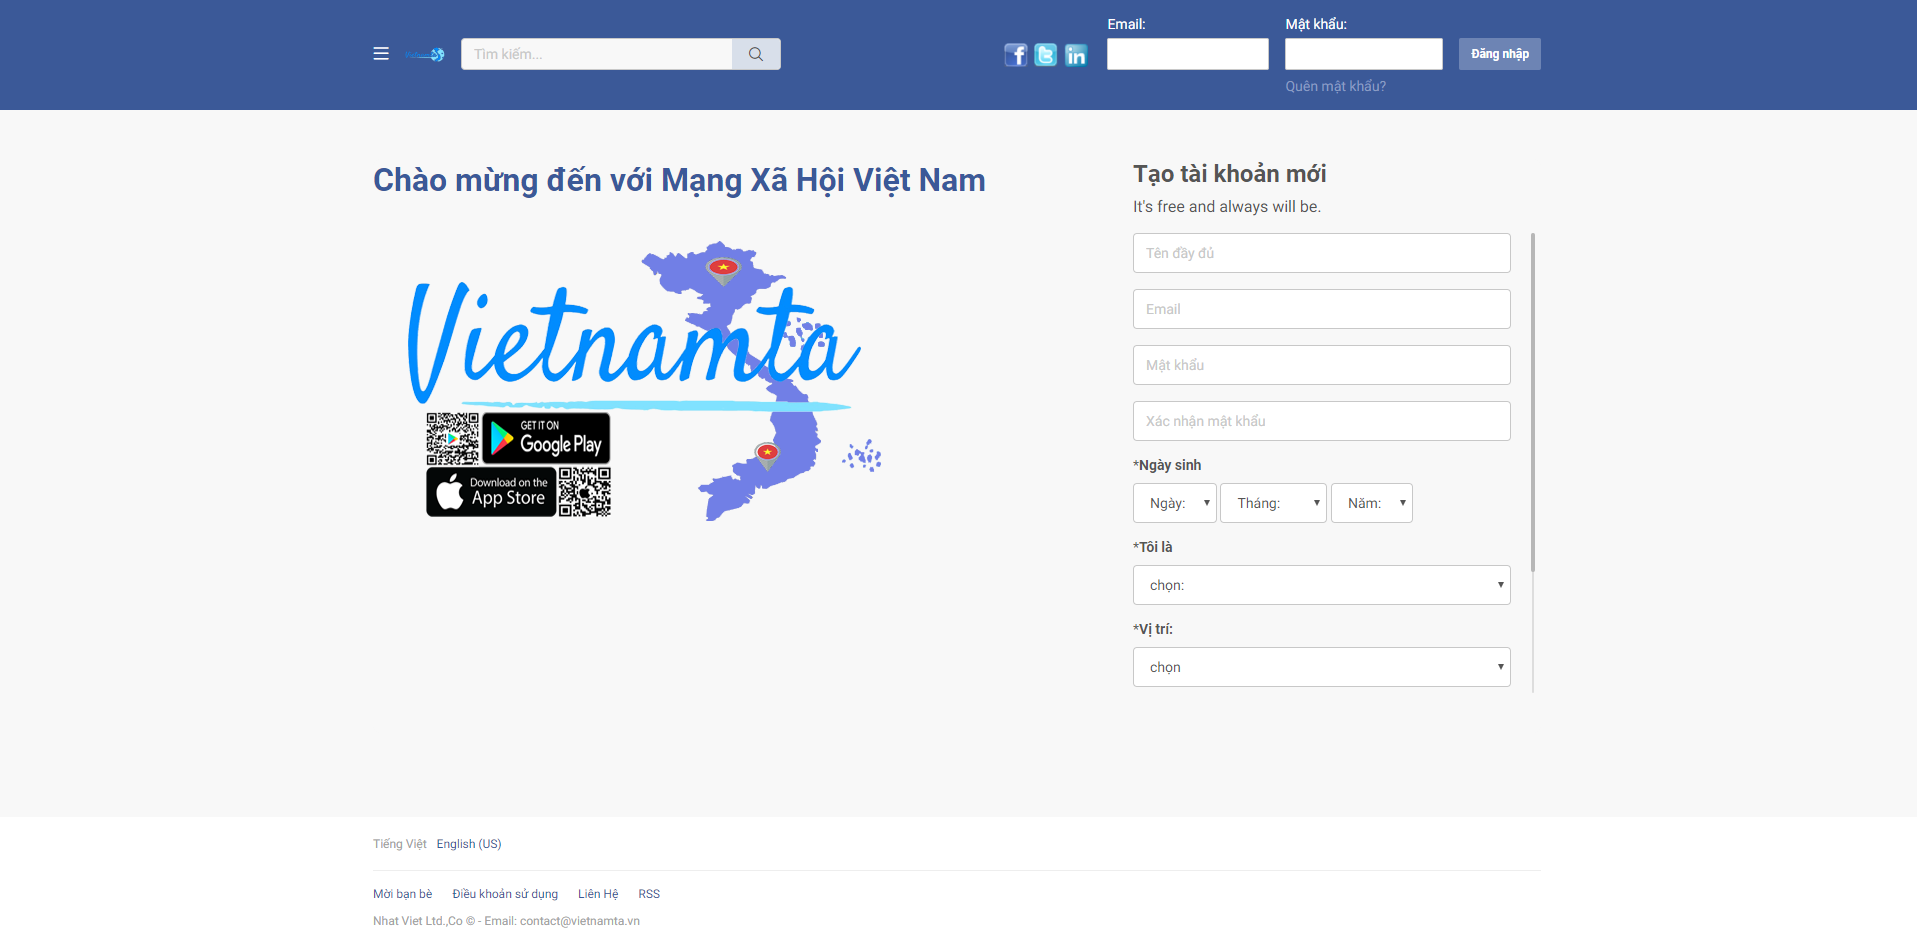 ​Self-proclaimed ‘Facebook alternatives’ raise security concerns in Vietnam